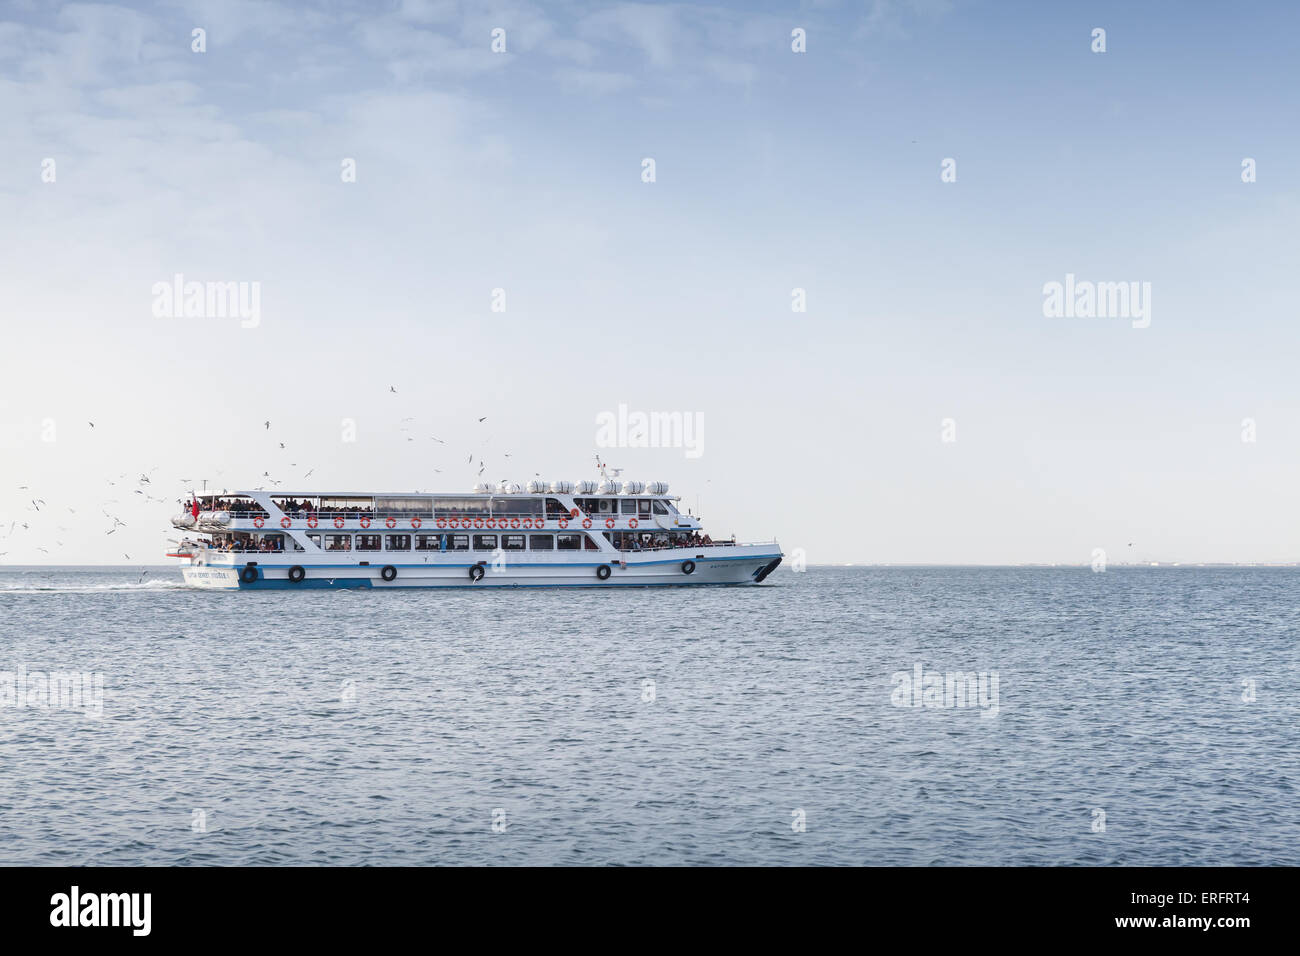 Izmir, Turkey - February 5, 2015: Big passenger boat full of people goes in Izmir bay, popular public city transport Stock Photo